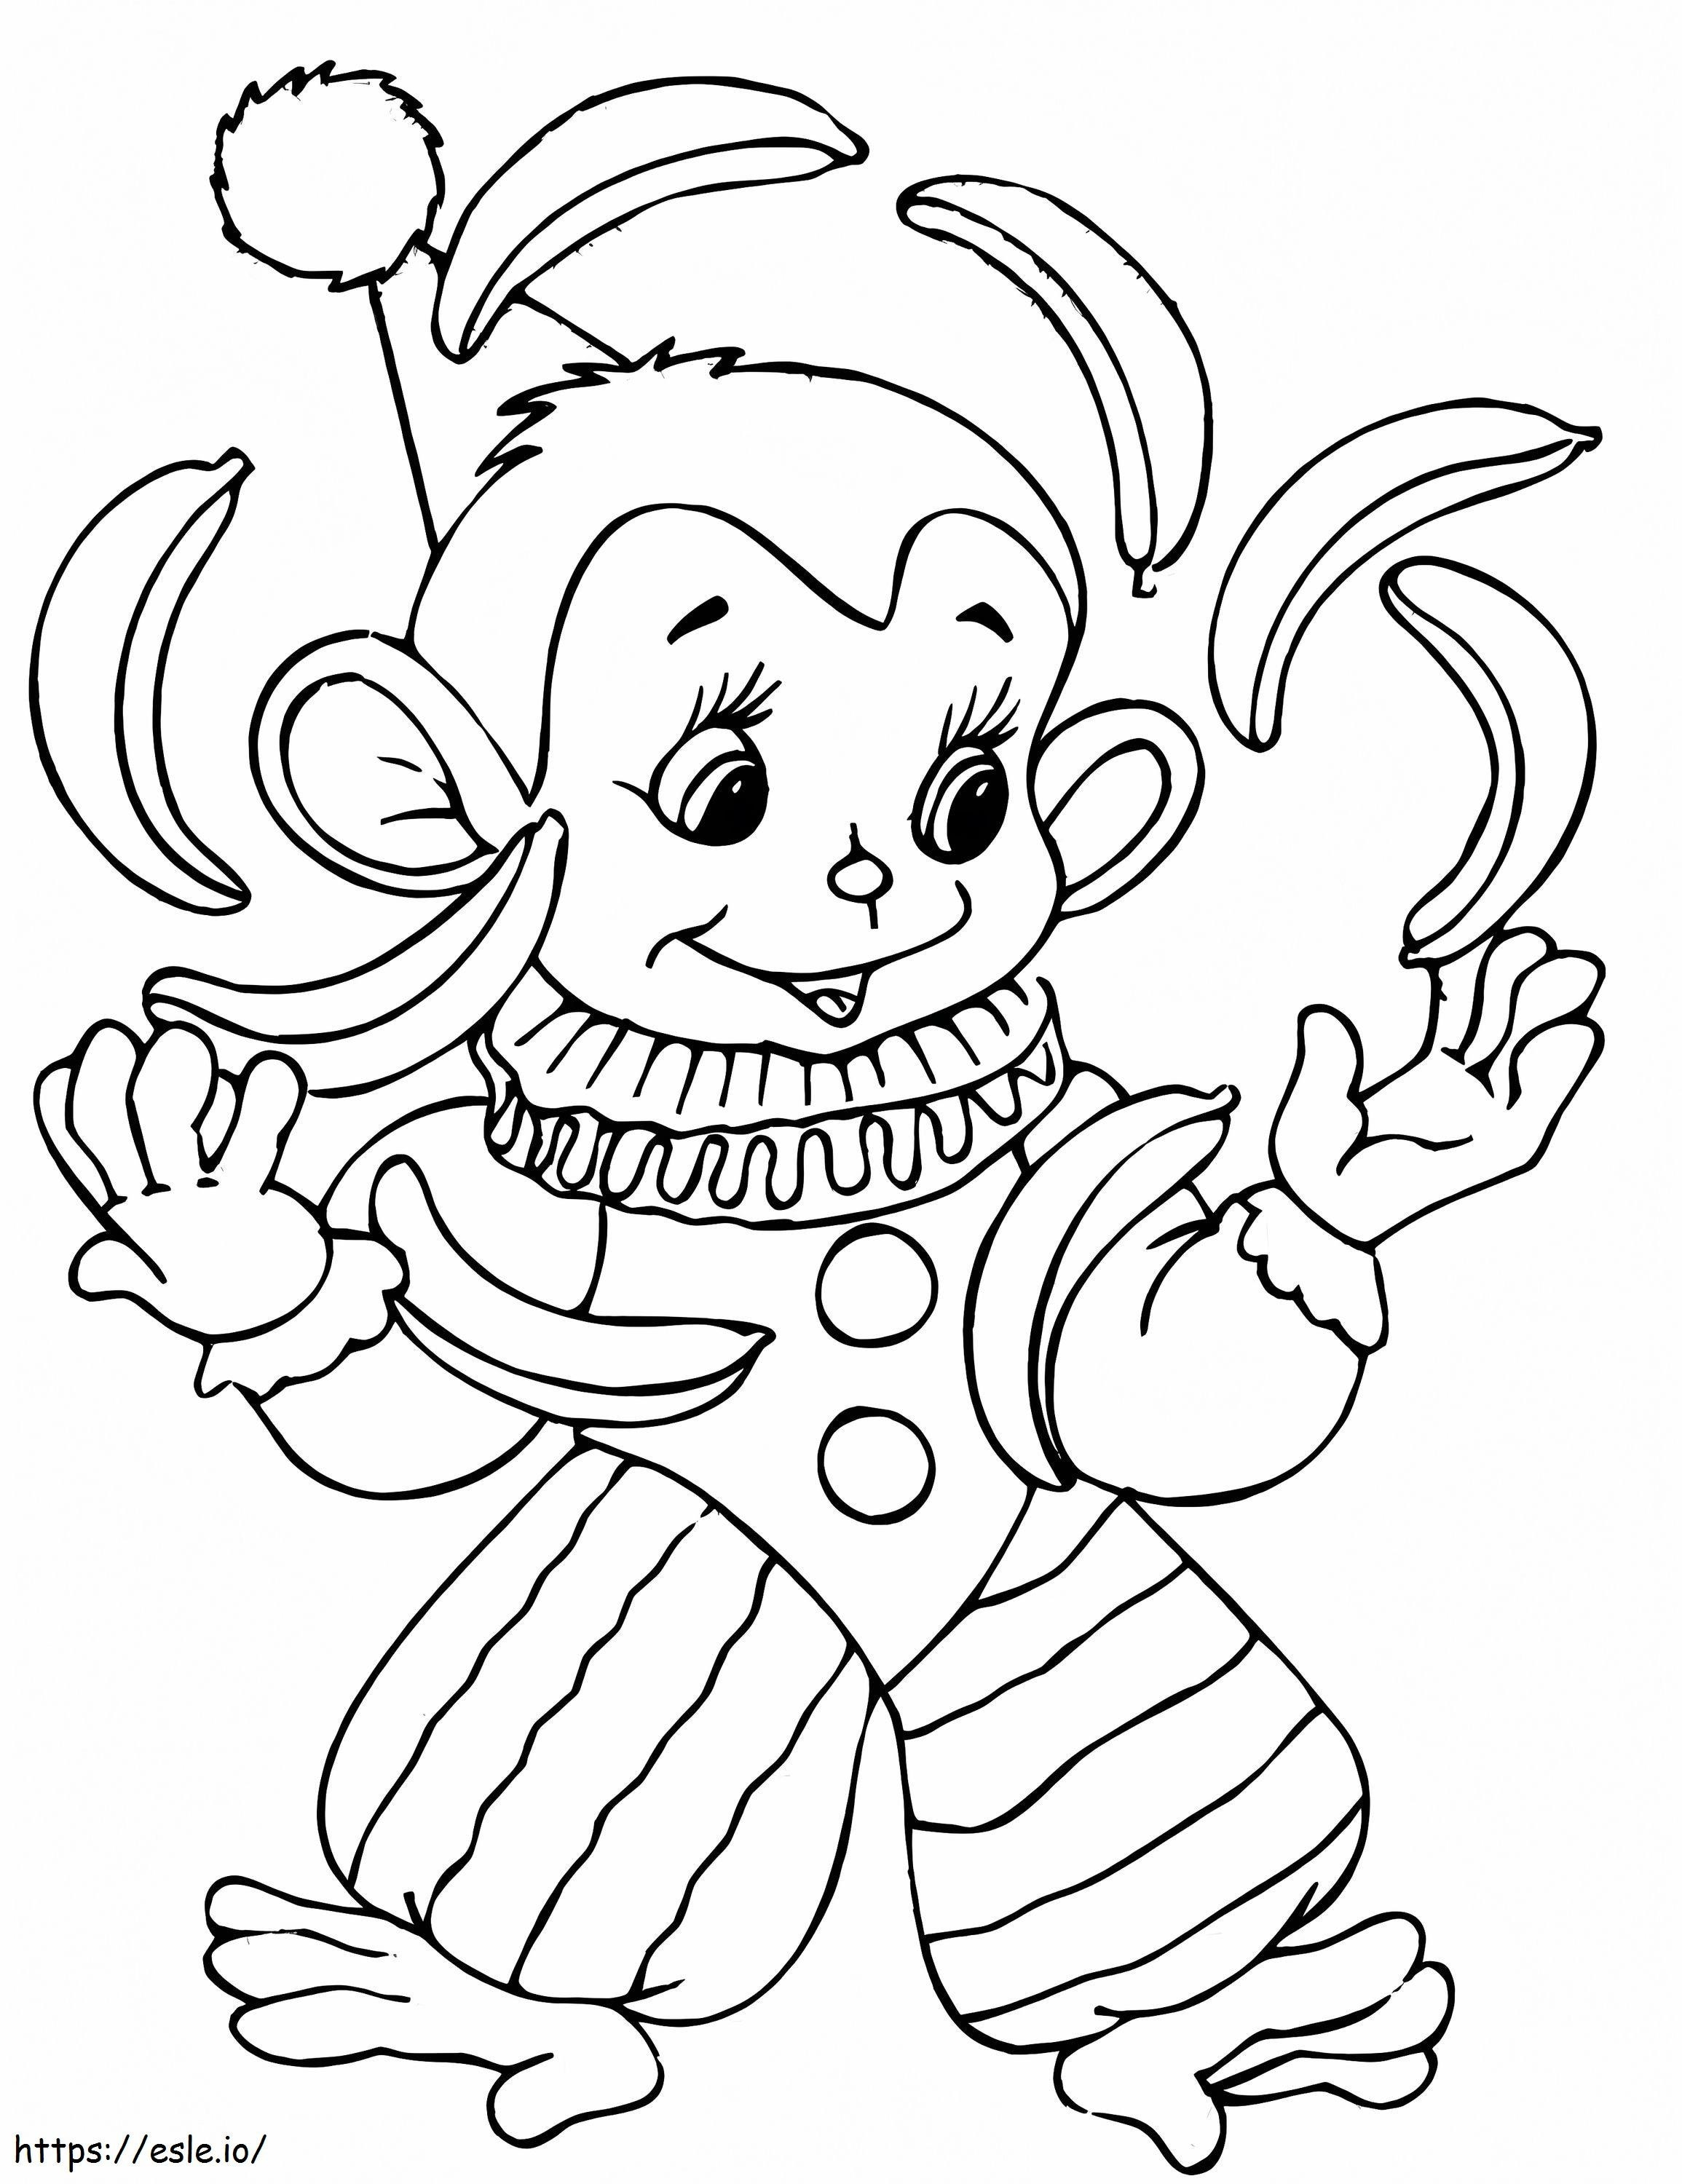 Clown Monkey coloring page